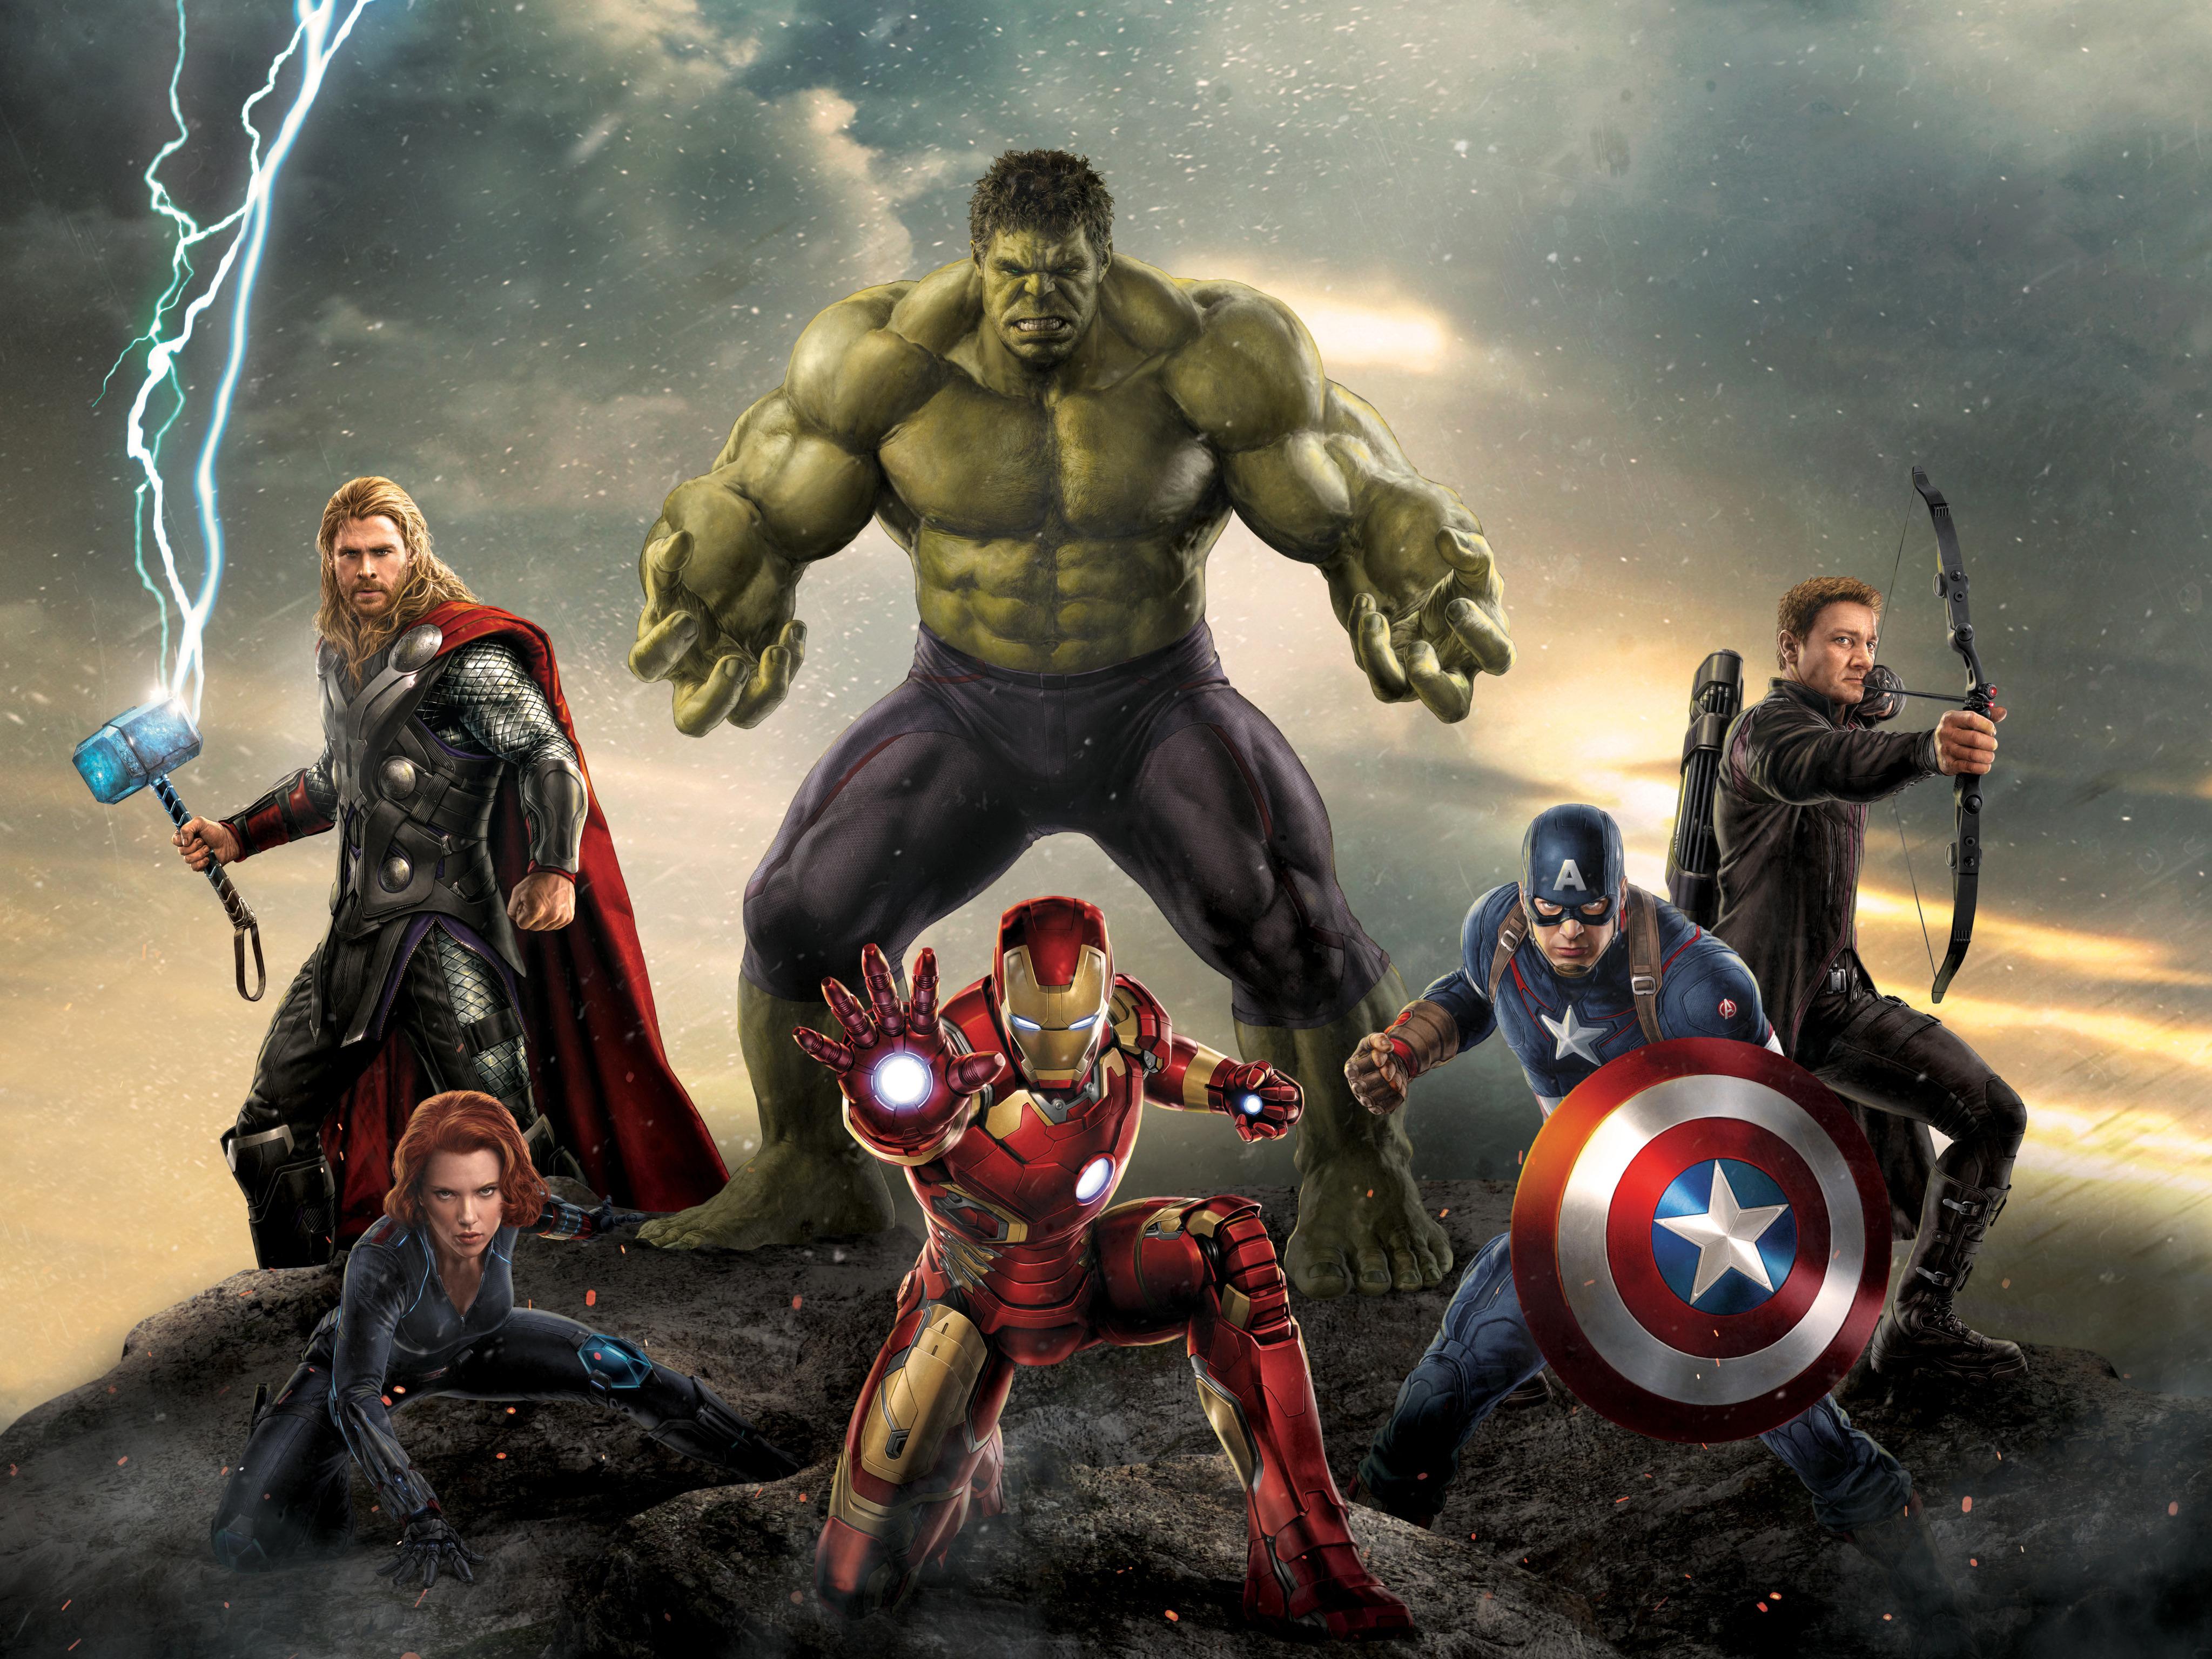 Movies Thor Avengers Age of Ultron wallpaper Desktop